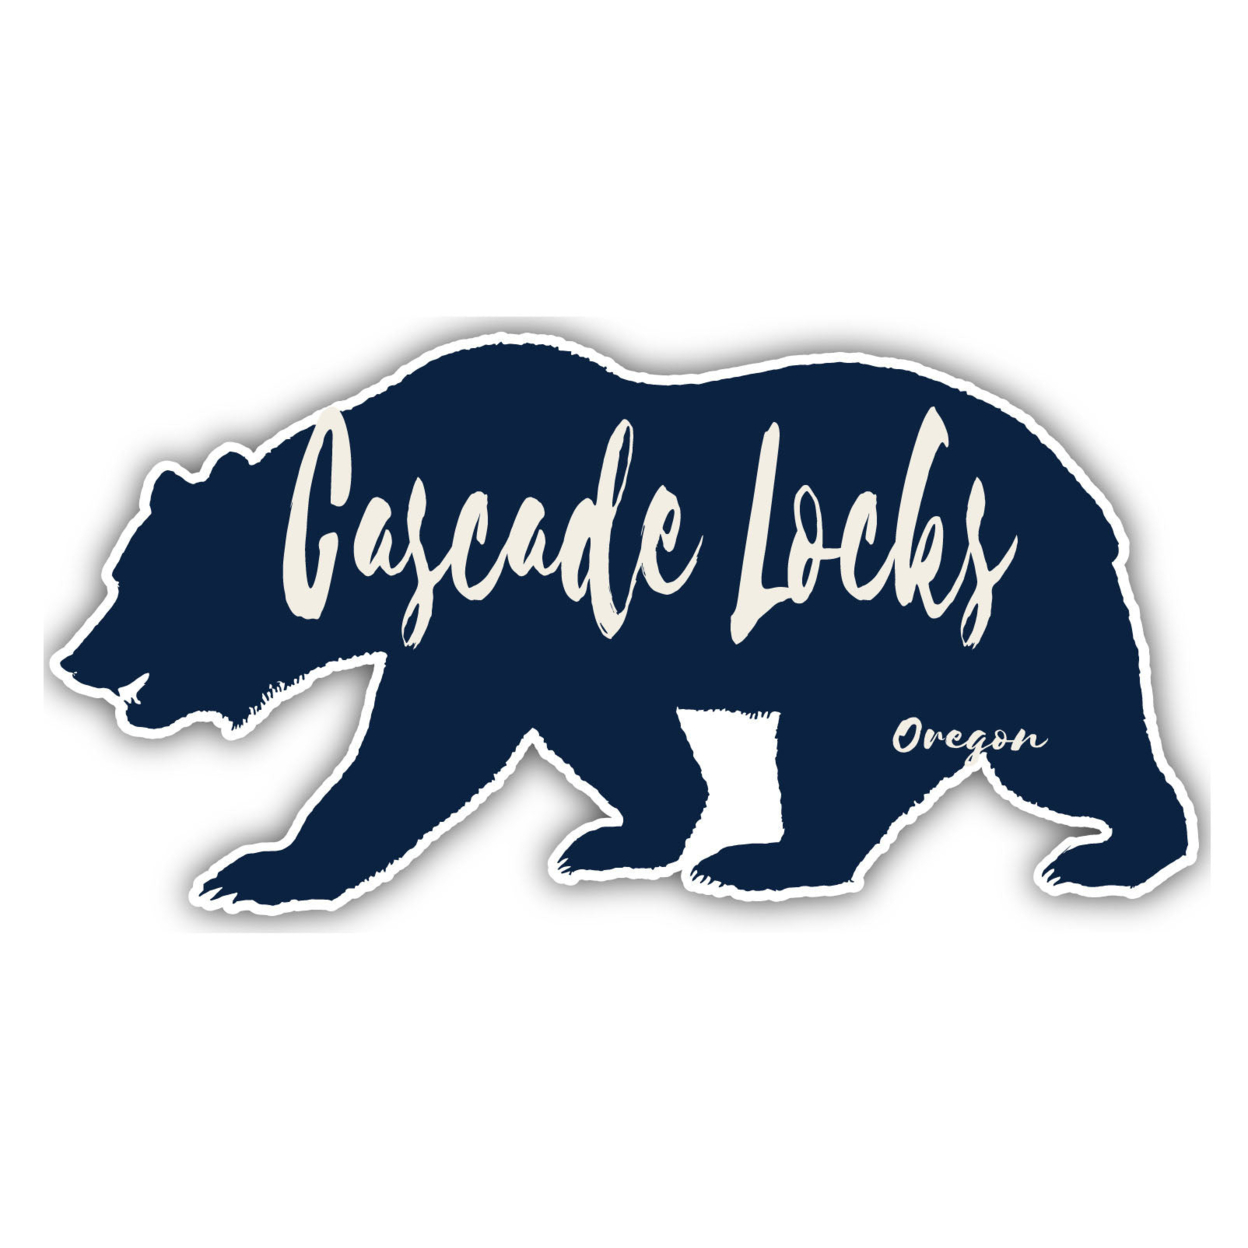 Cascade Locks Oregon Souvenir Decorative Stickers (Choose Theme And Size) - Single Unit, 8-Inch, Adventures Awaits